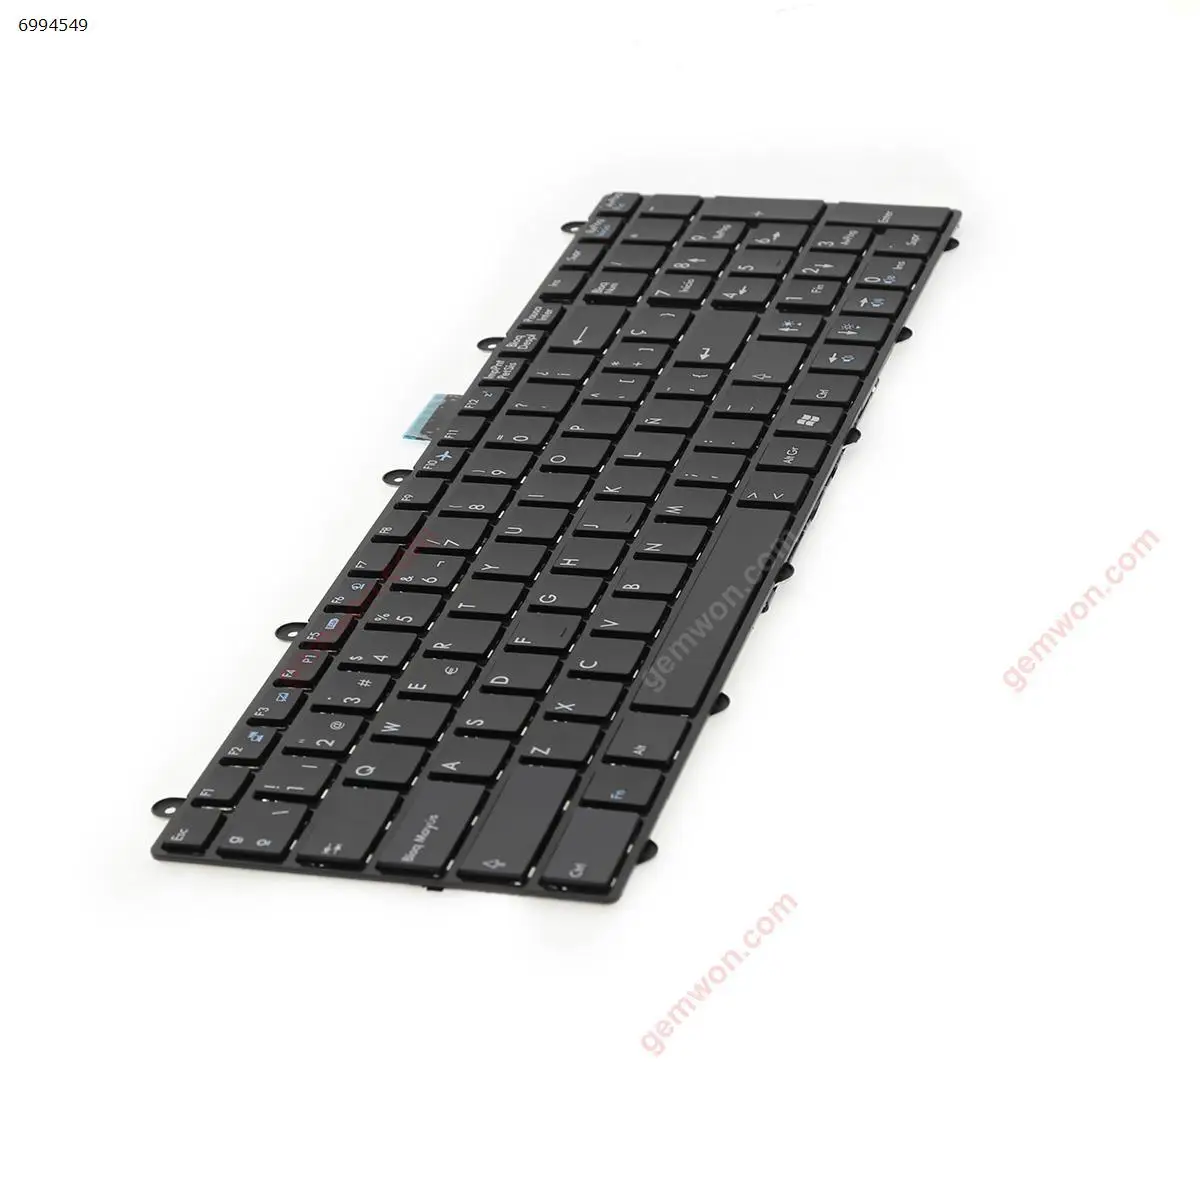 Нова Испанска Клавиатура за Лаптоп SP за MSI GT60 GT70 GT780 GT783 GX780 SWN259A1 V139922AK ЧЕРНА РАМКА ЧЕРНО, Без Подсветка 3